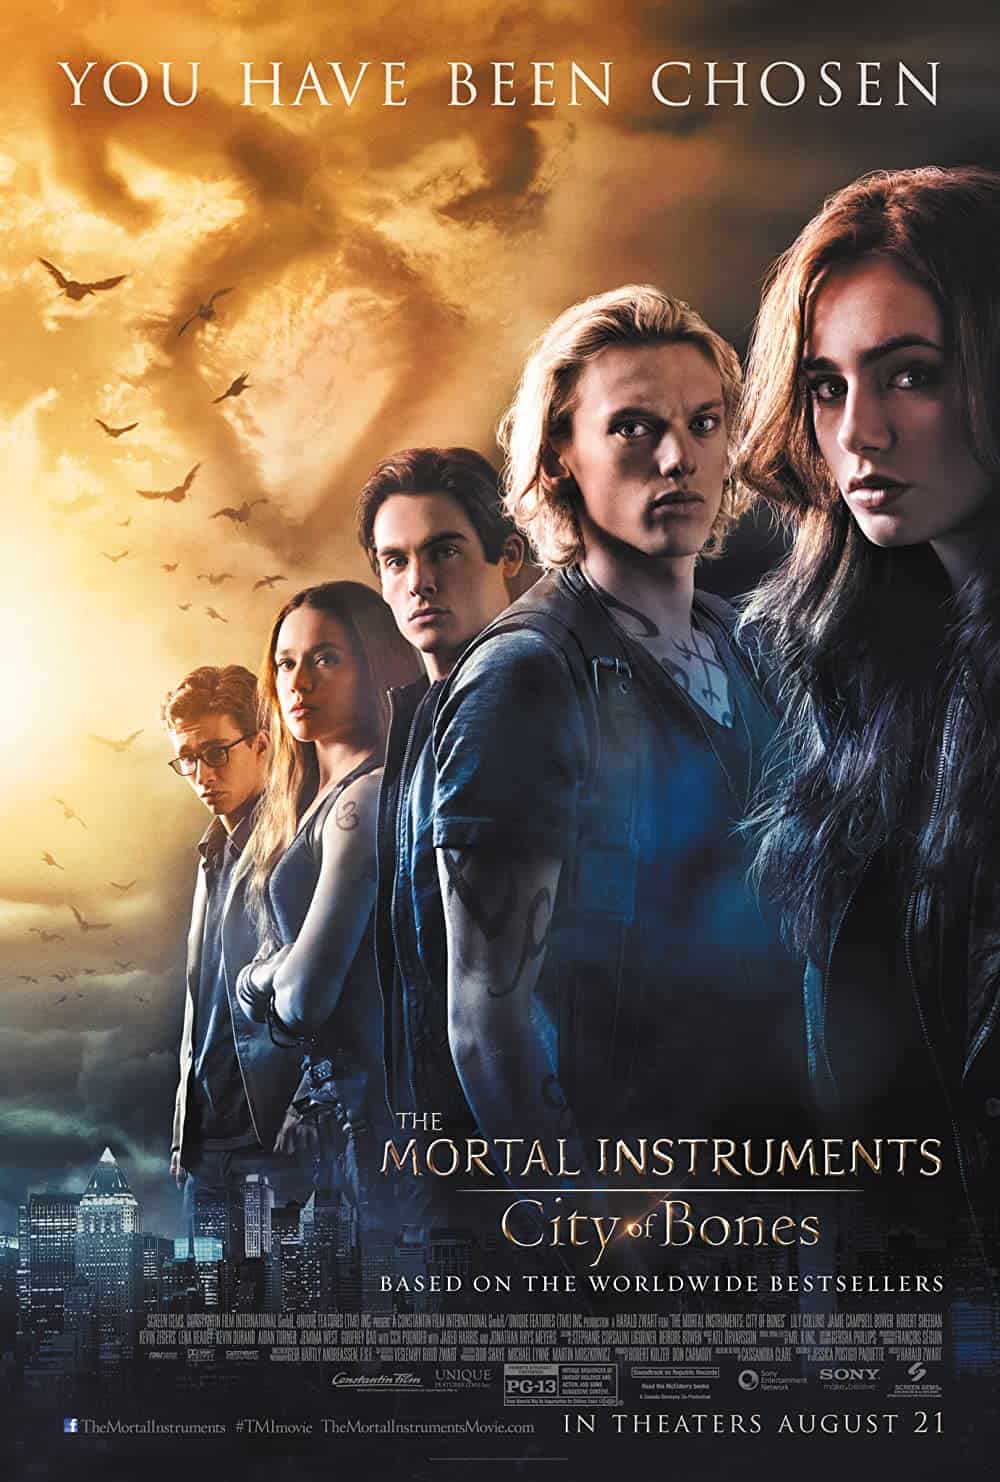 Harry Potter similar movies The Mortal Instruments City of Bones (2013)